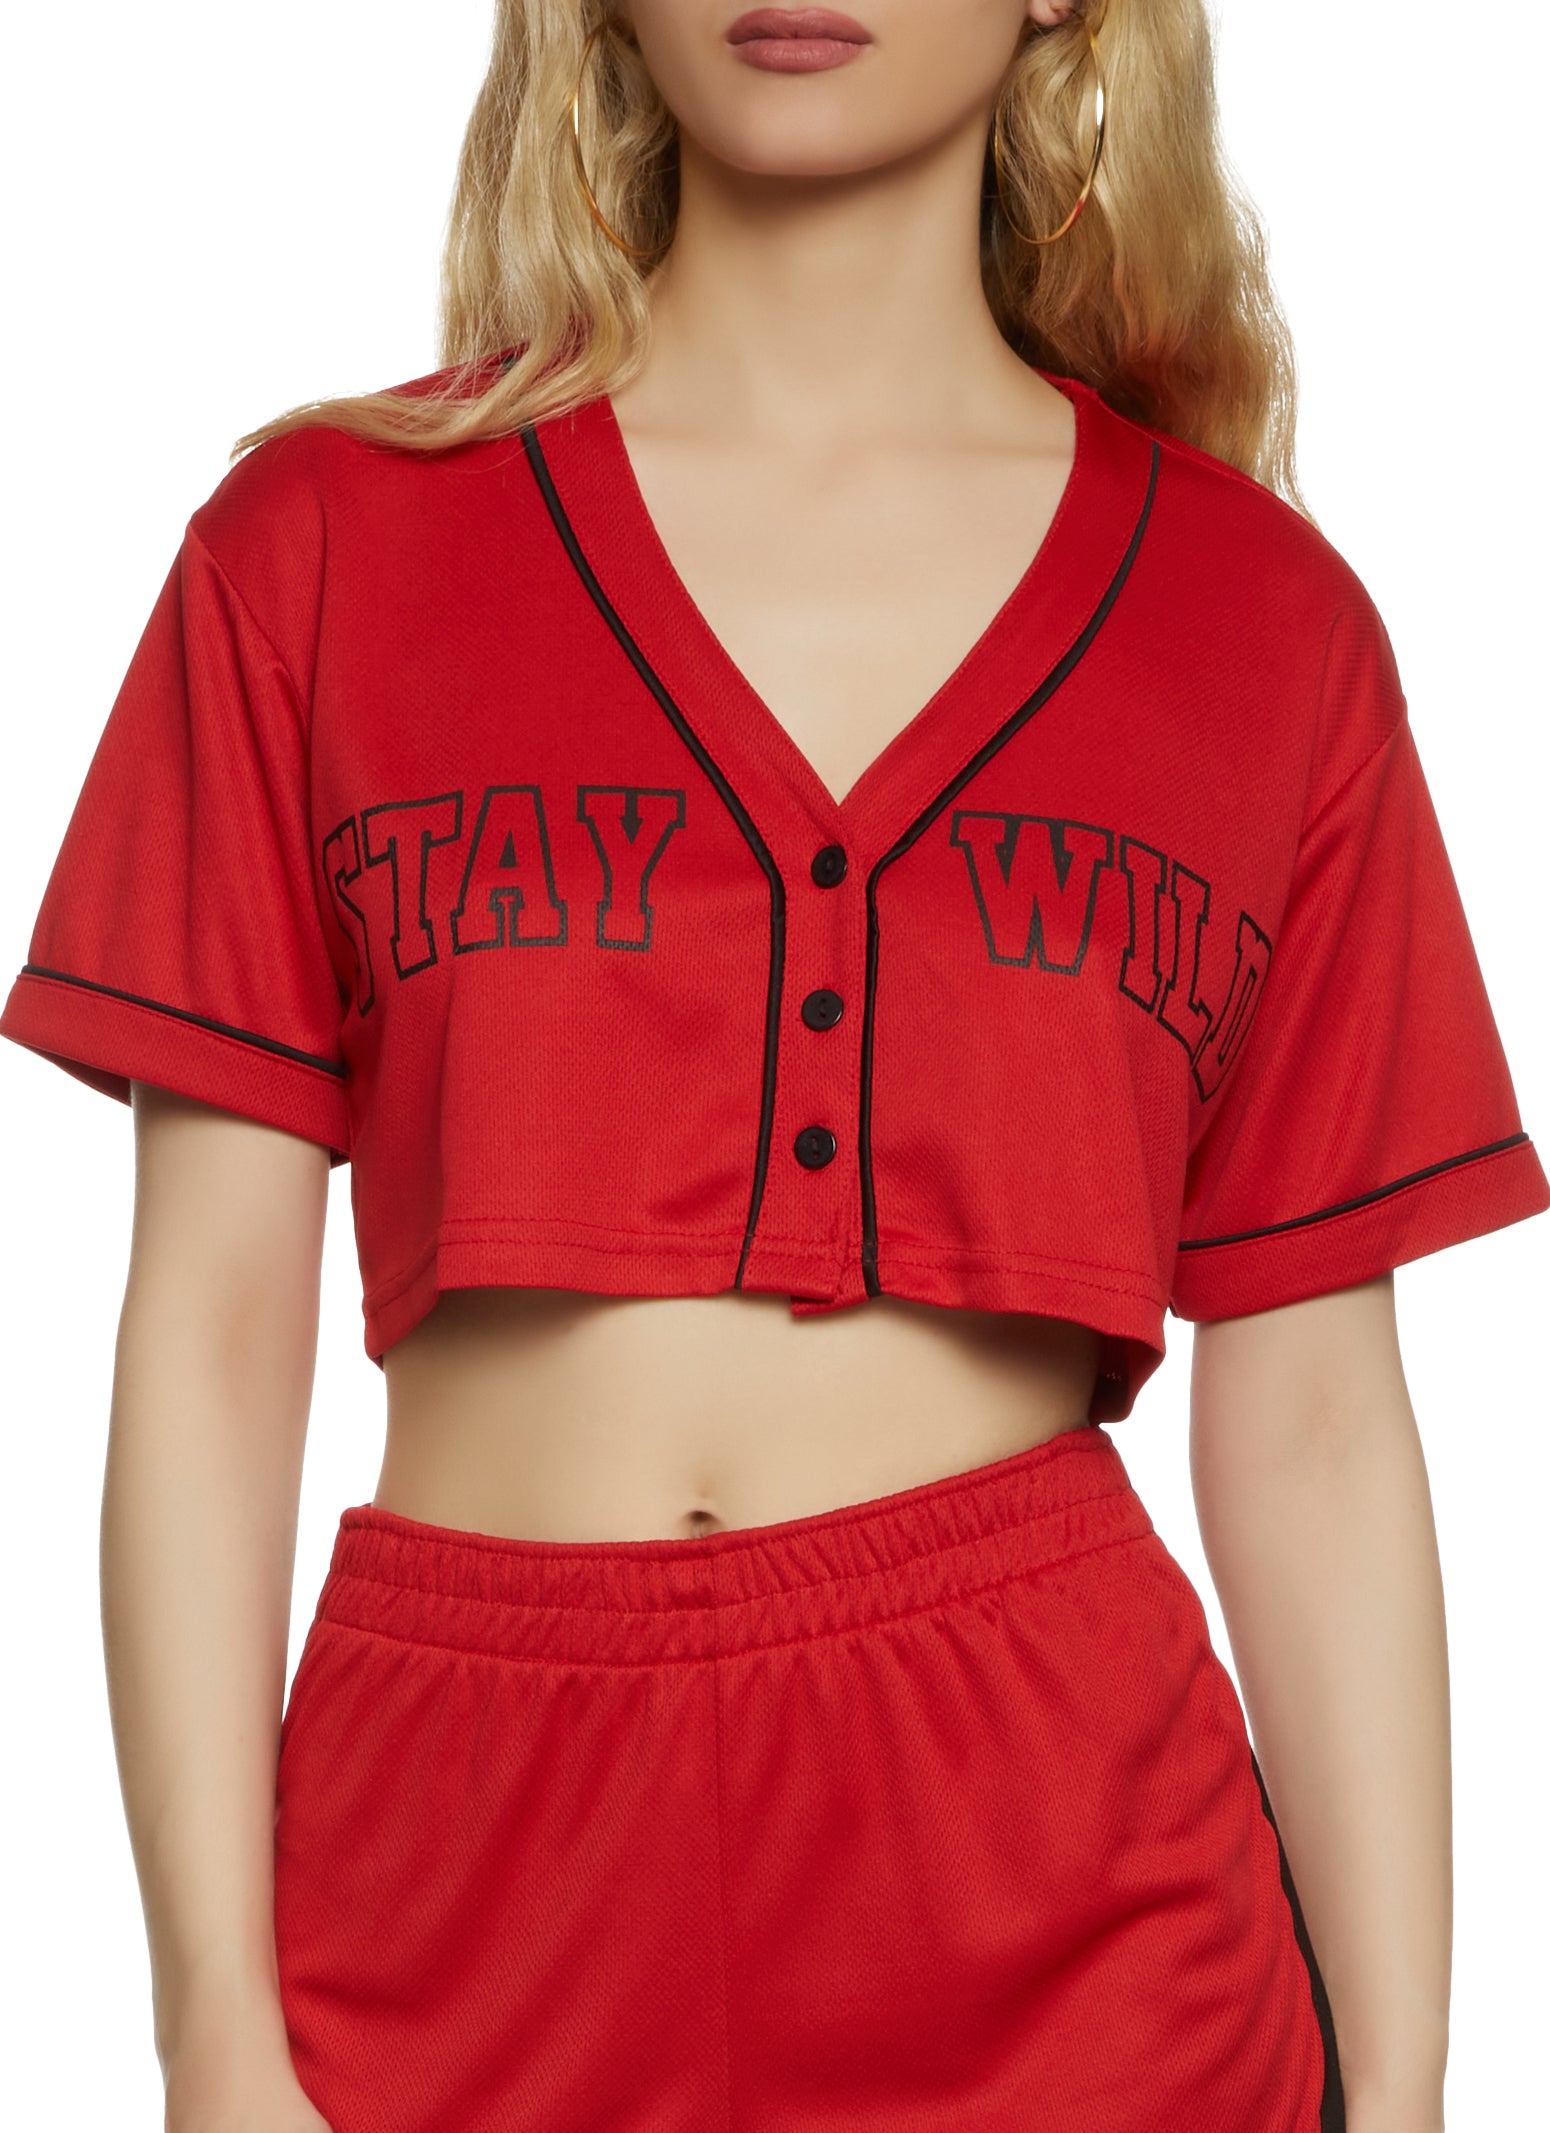 Customize Your Own Crop Top Baseball Jersey 